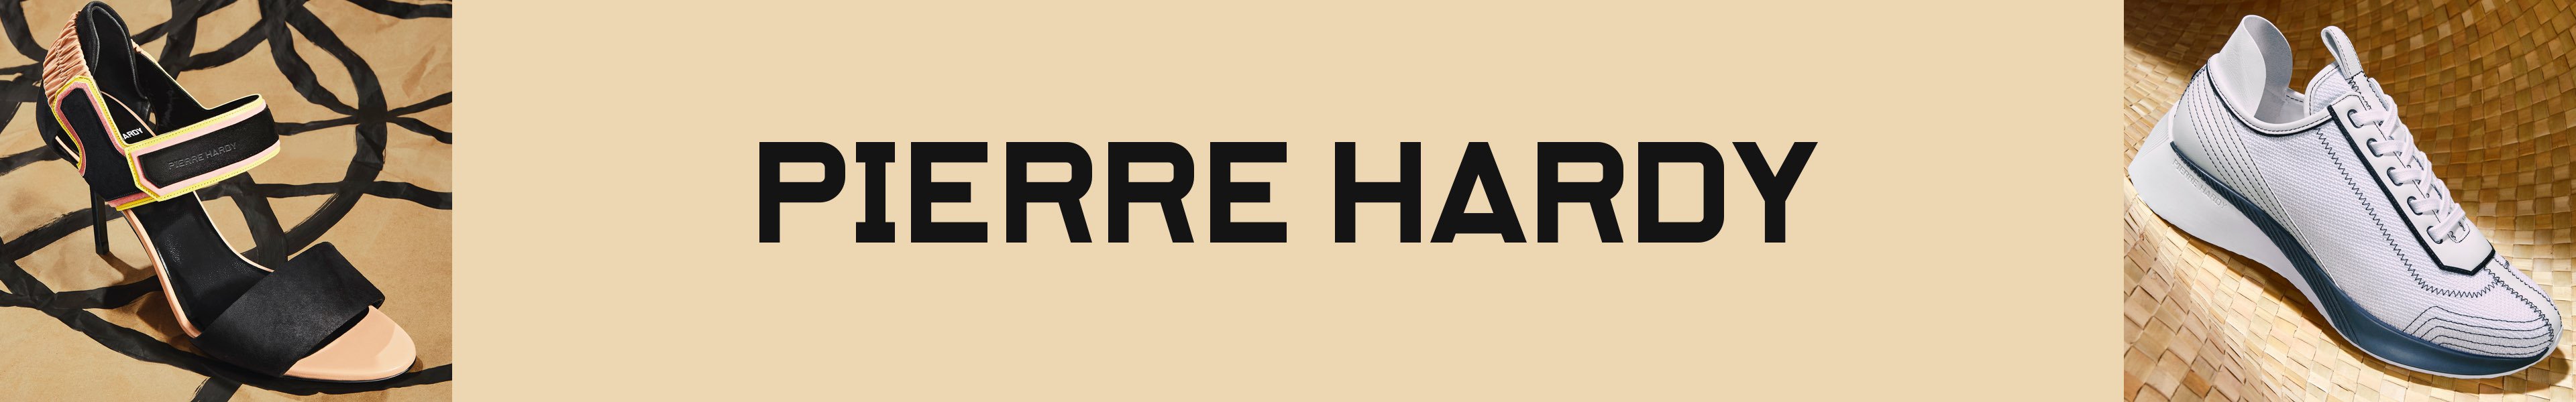 Pierre Hardy | Designers | Holt Renfrew Canada